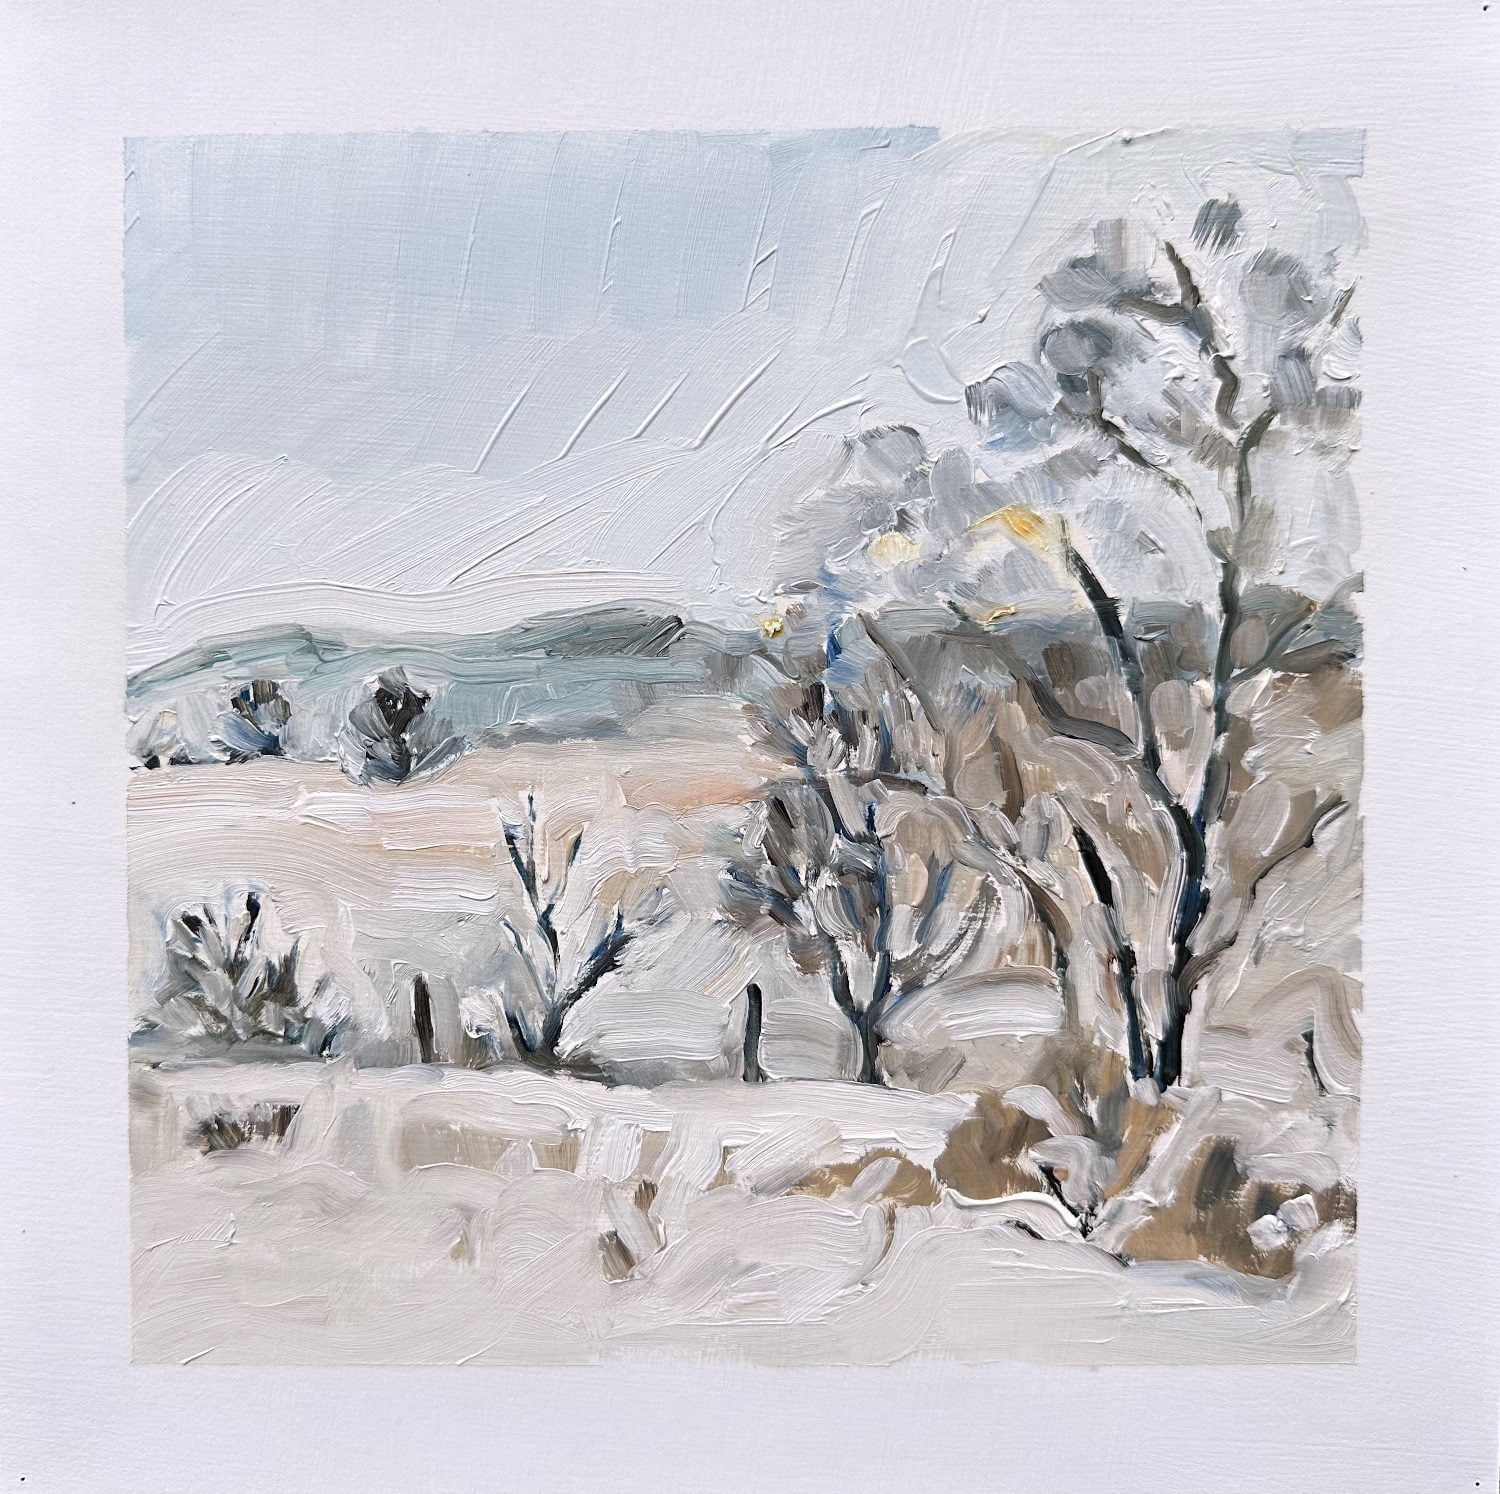 edie-marshall-terrain-970-canadian-landscape-artist-winter-painting-online-gallery